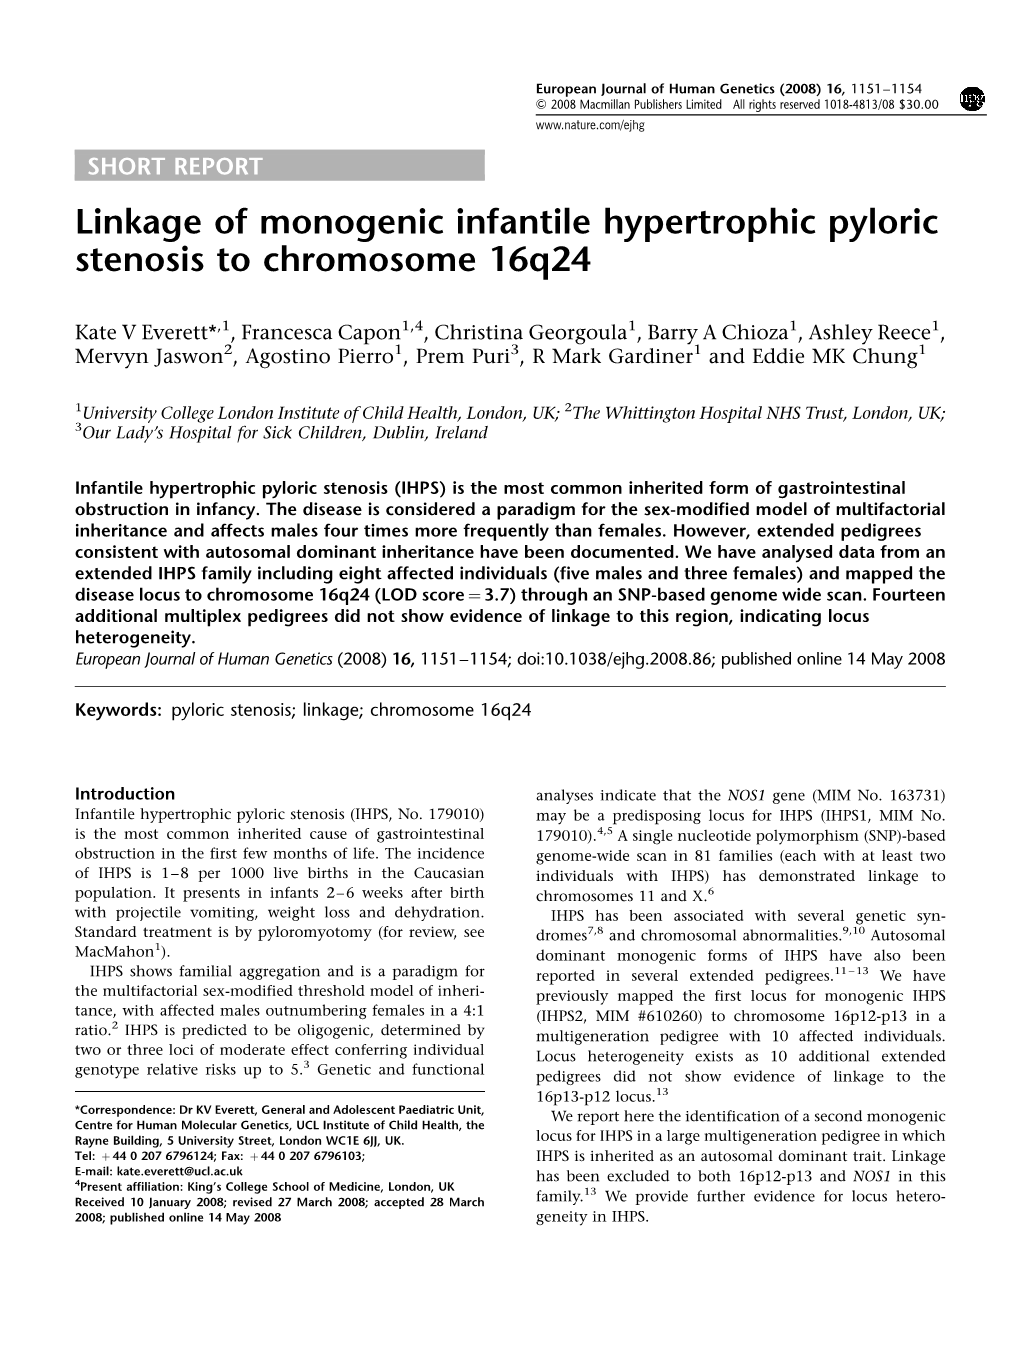 Linkage of Monogenic Infantile Hypertrophic Pyloric Stenosis to Chromosome 16Q24